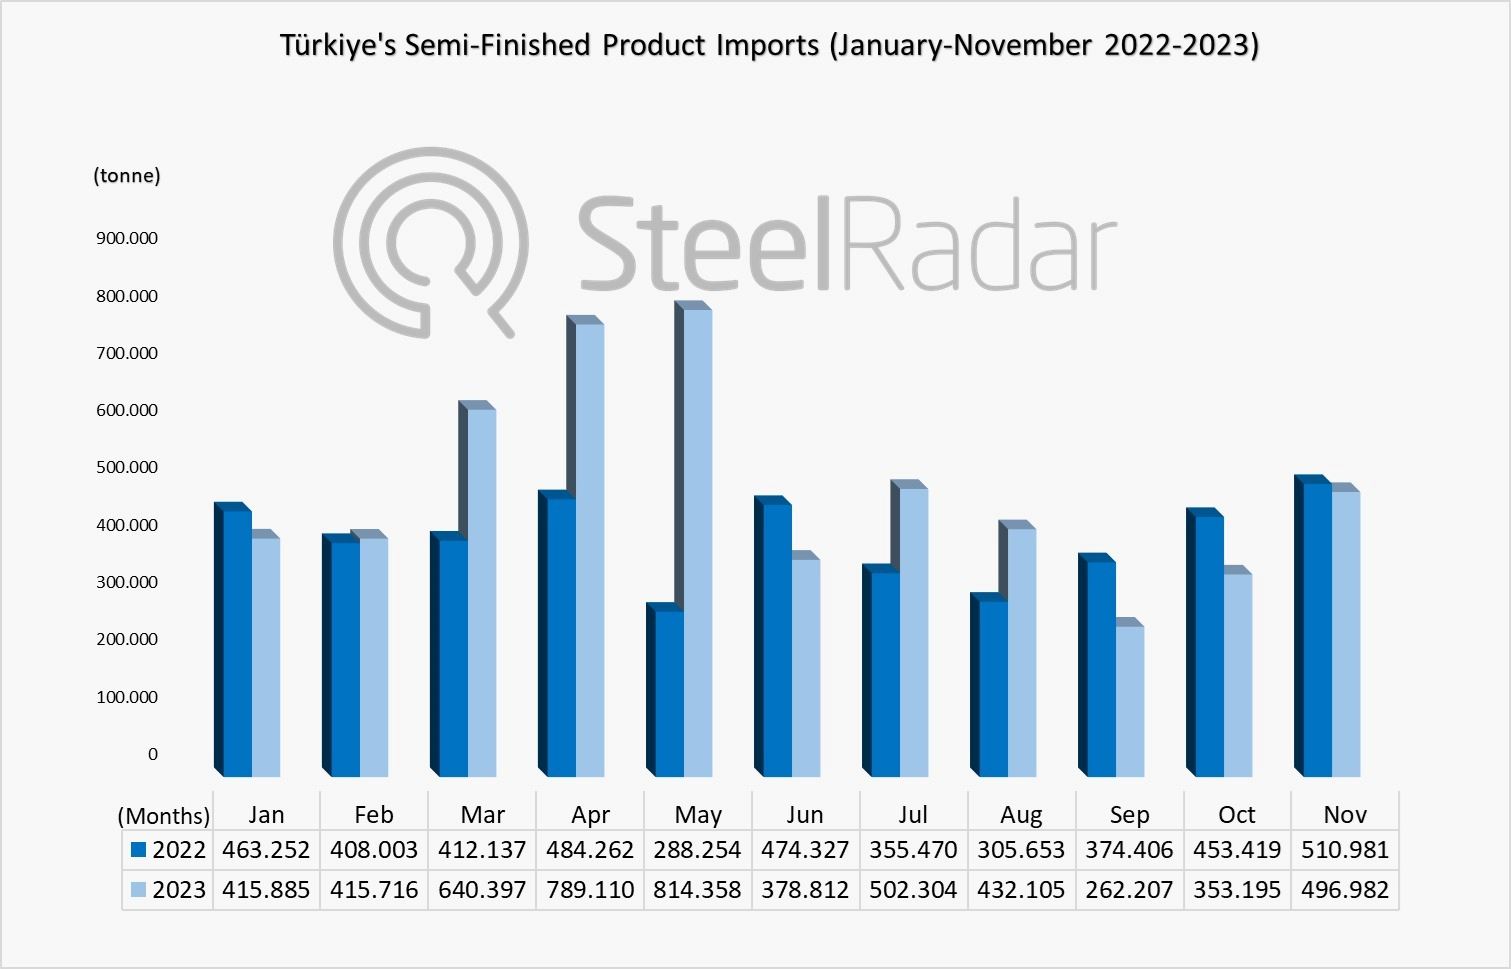 Türkiye's semi-finished product imports decreased by 2.74% in November